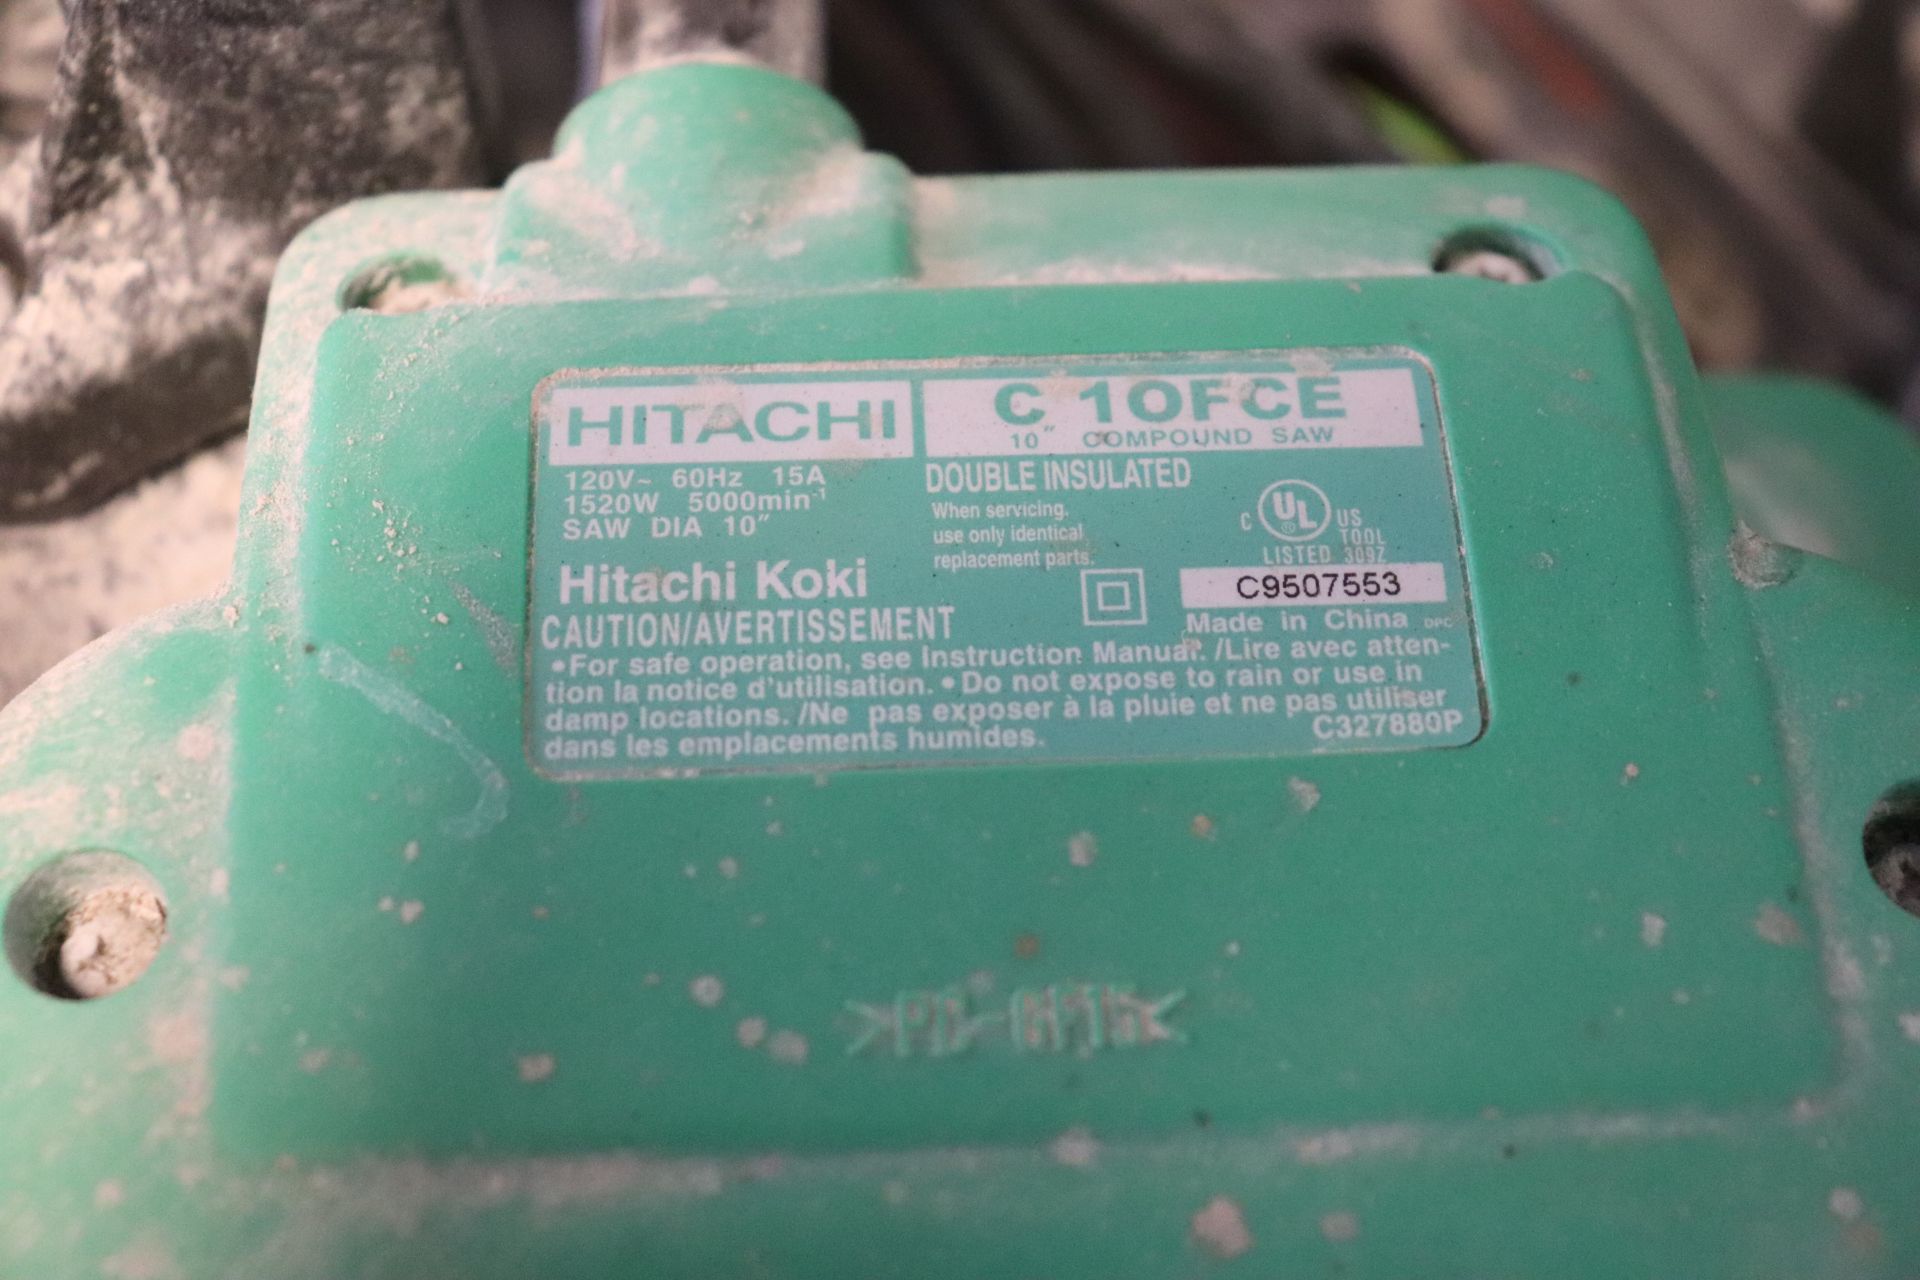 Hitachi c10fce 10" compound saw - Image 2 of 2